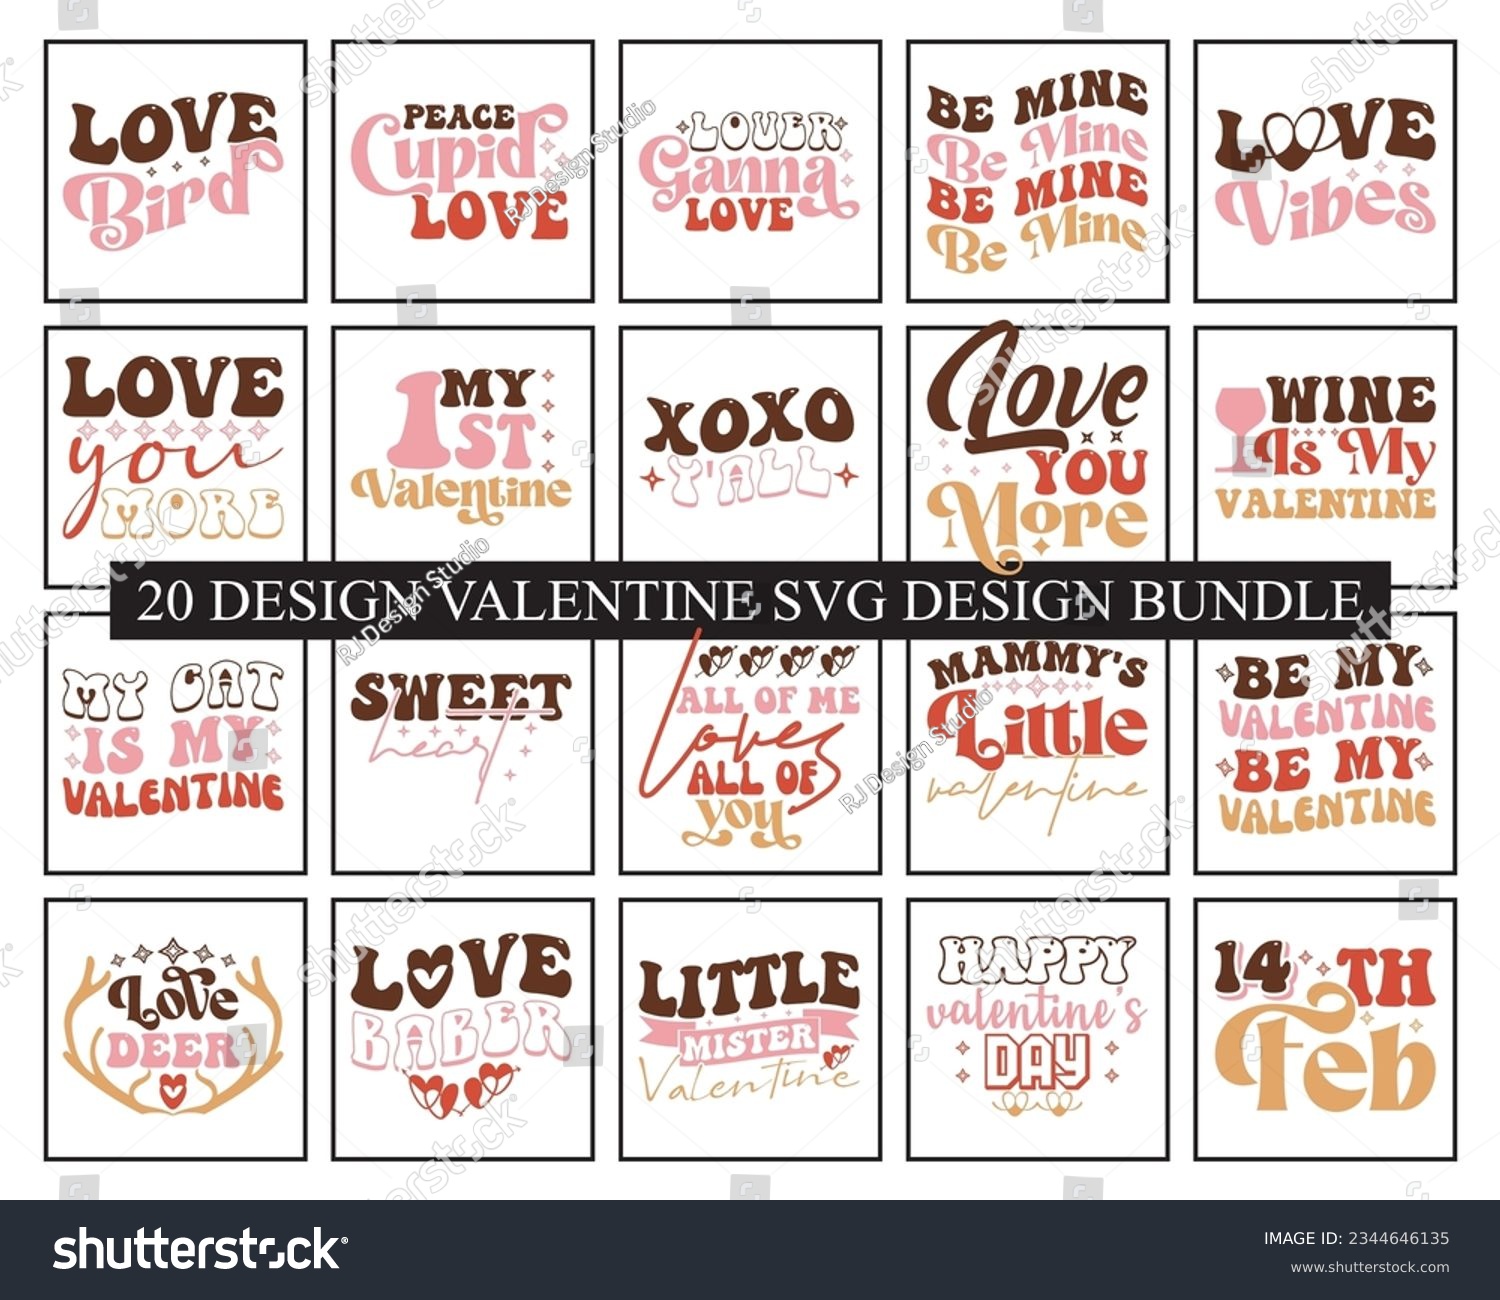 SVG of Valentine SVG Design Bundle, Valentine SVG Design Quotes, Retro Valentine SVG Design svg